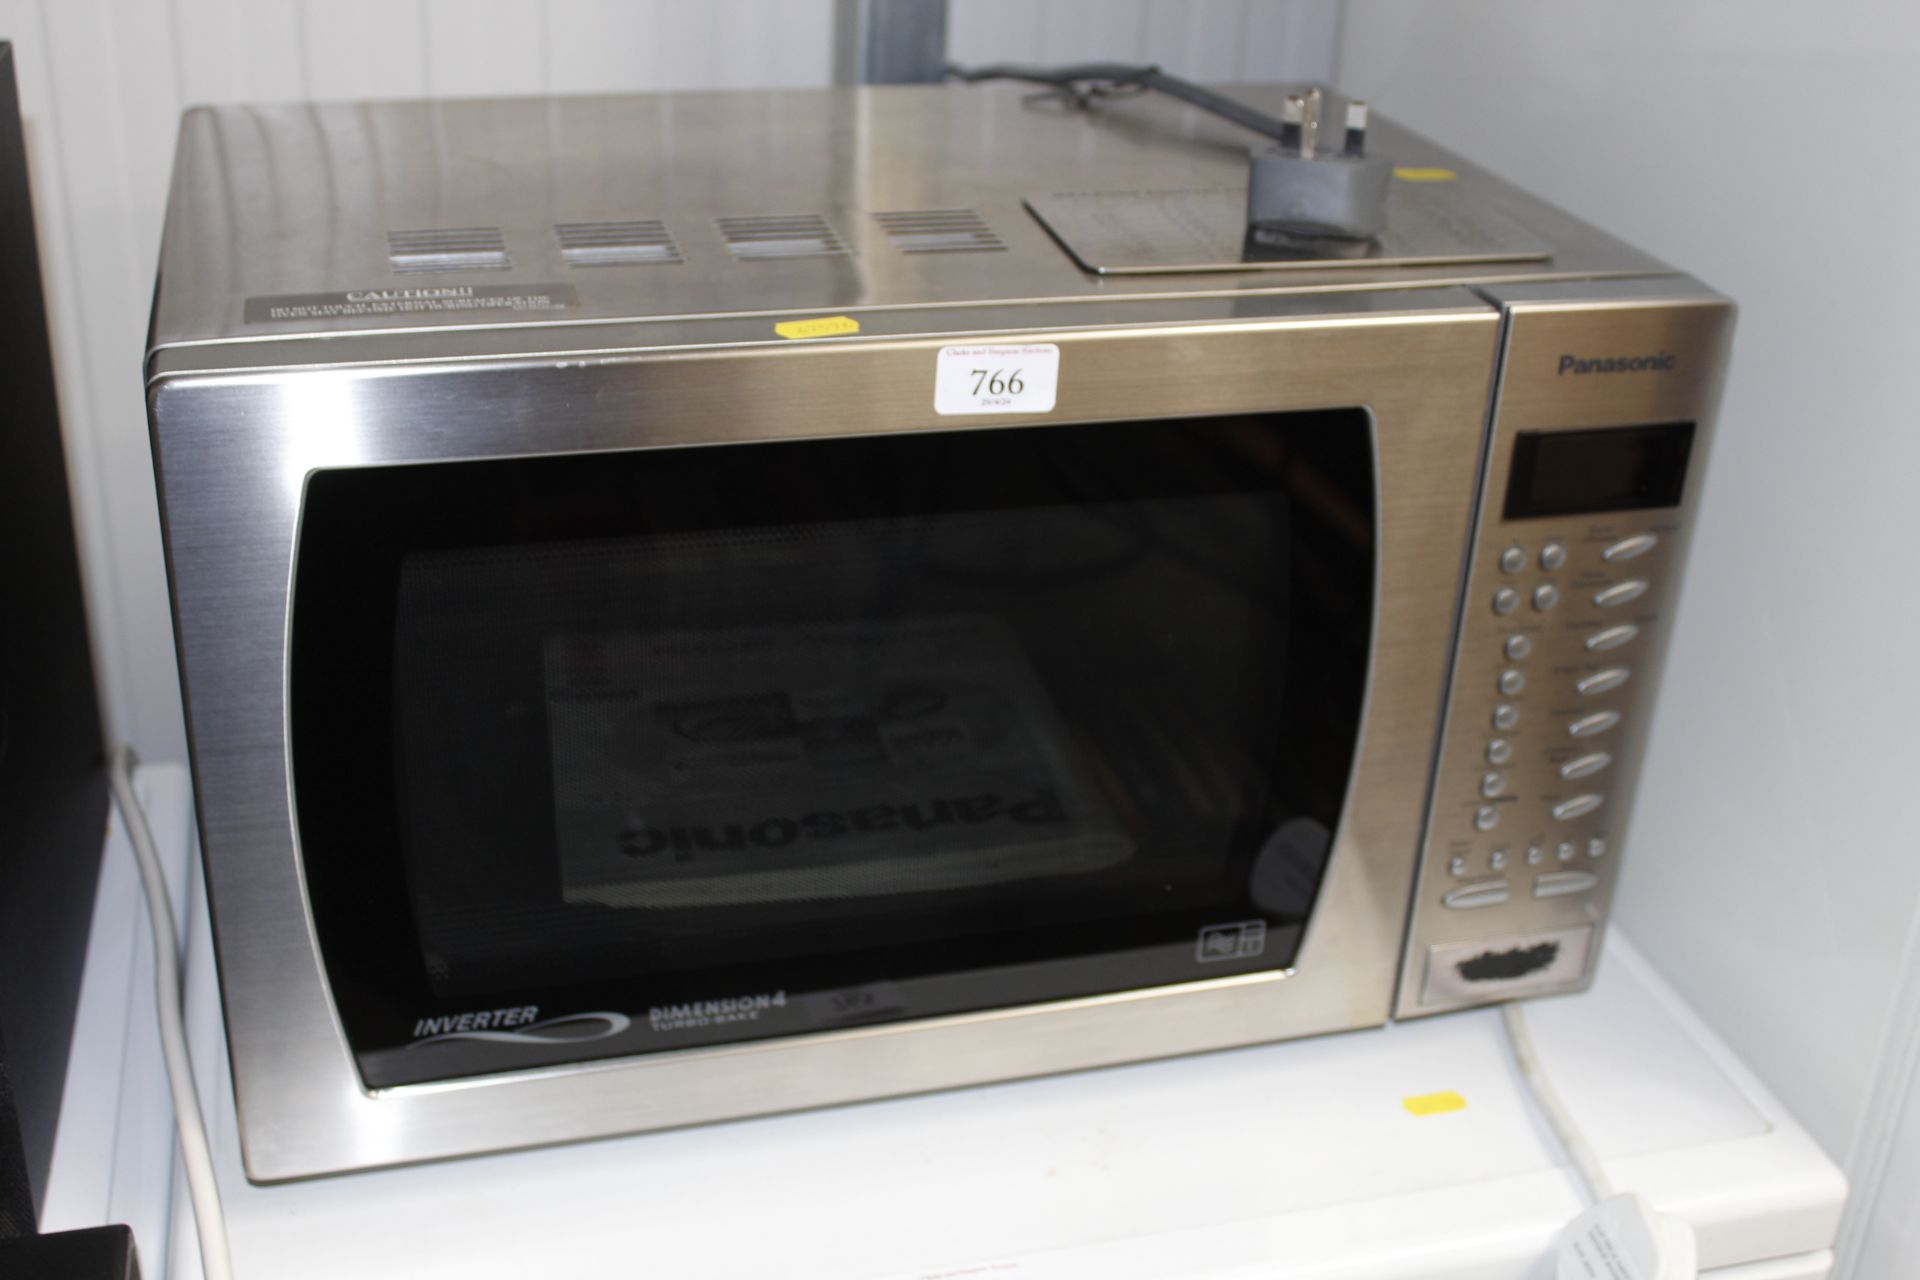 A Panasonic inverter microwave